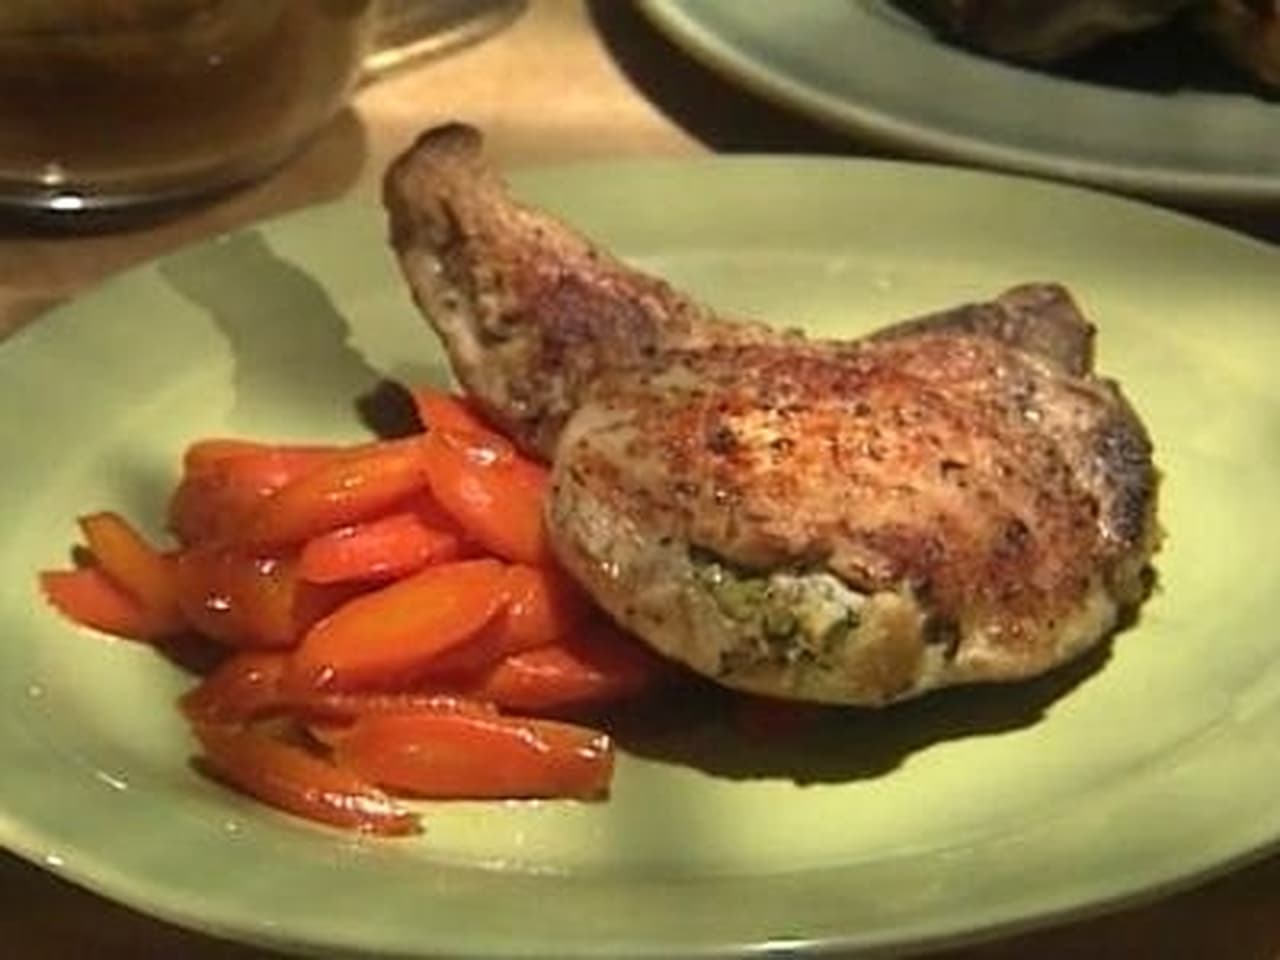 America's Test Kitchen - Season 5 Episode 5 : Pork Chops and Gravy